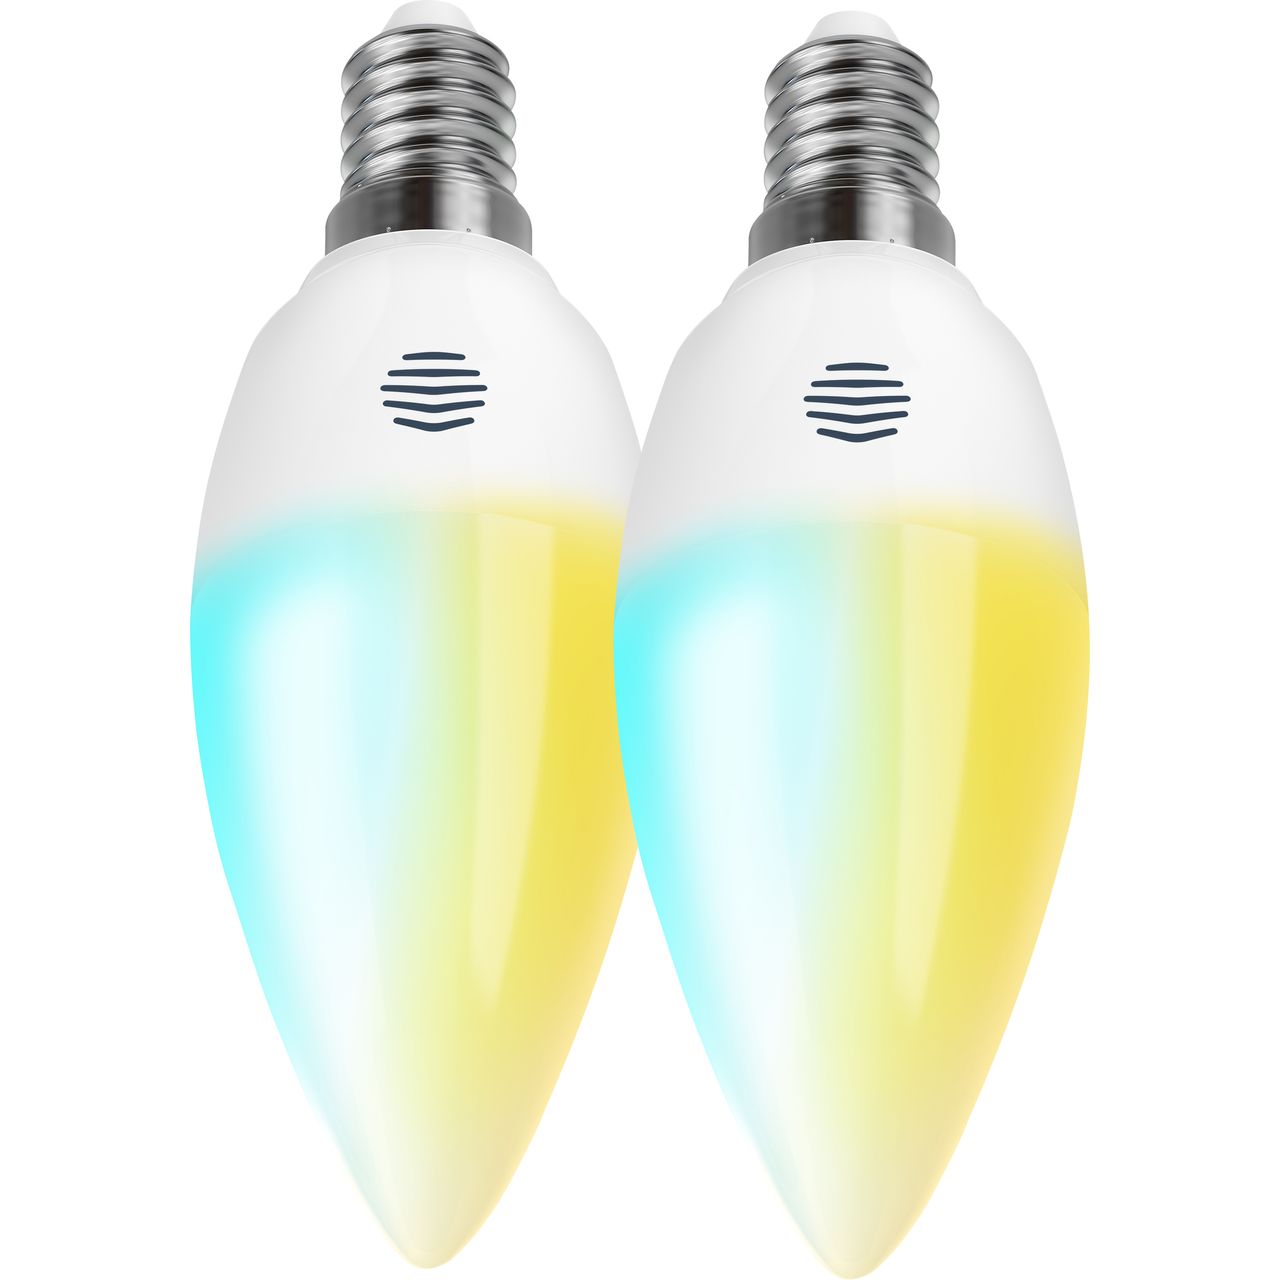 UK7003229 Smart Light Bulb Twin |